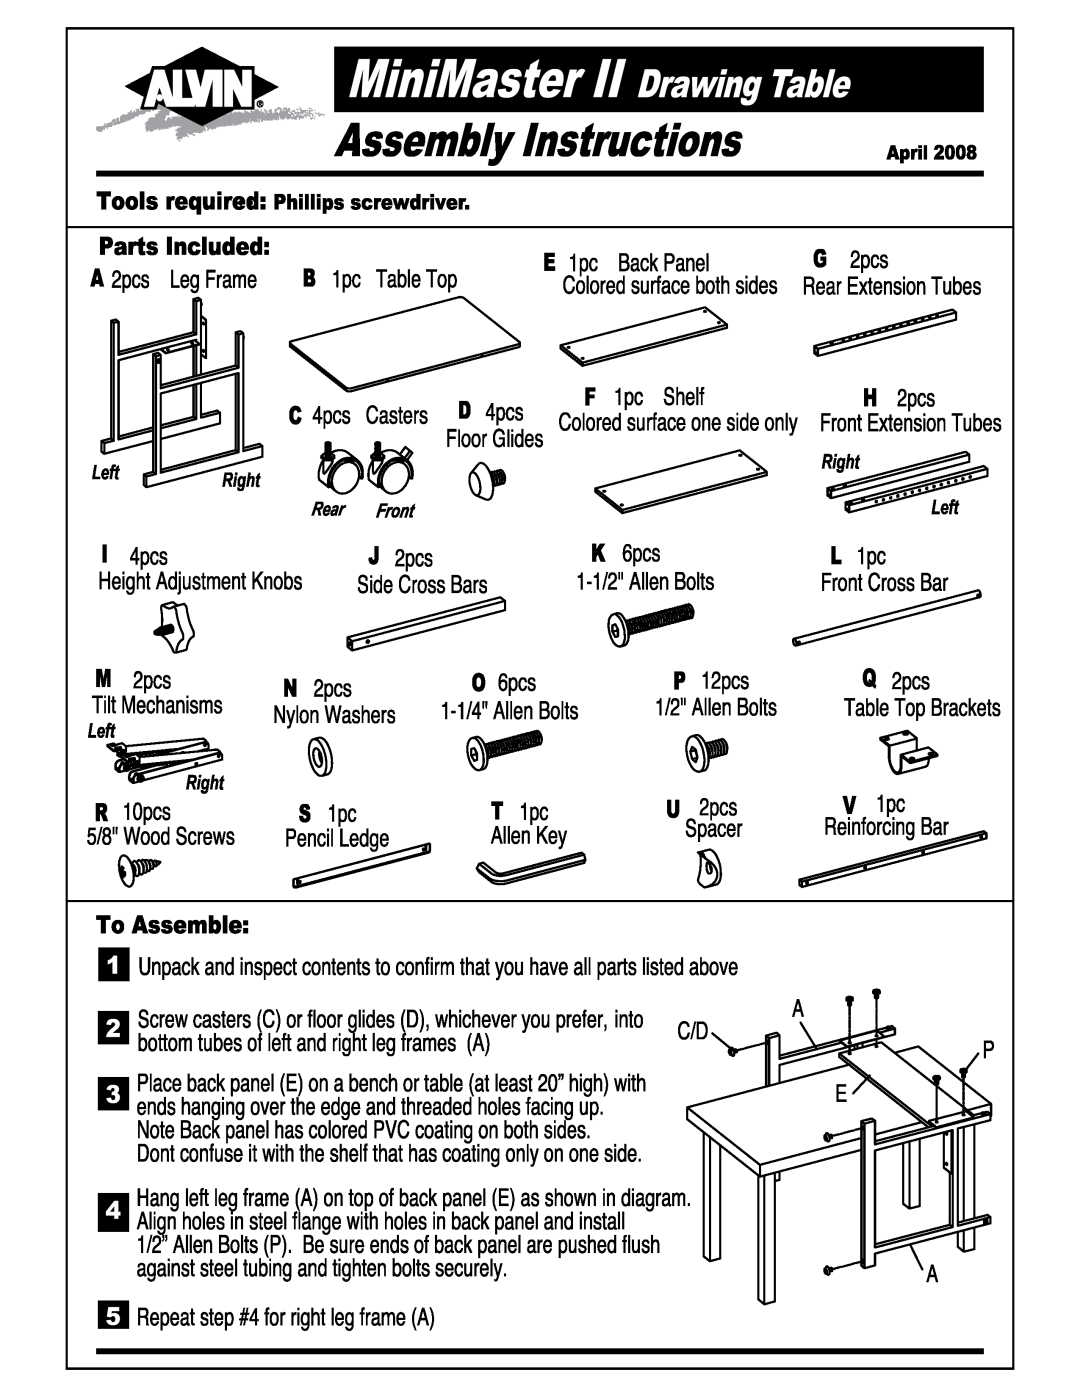 Alvin Drawing Table manual 